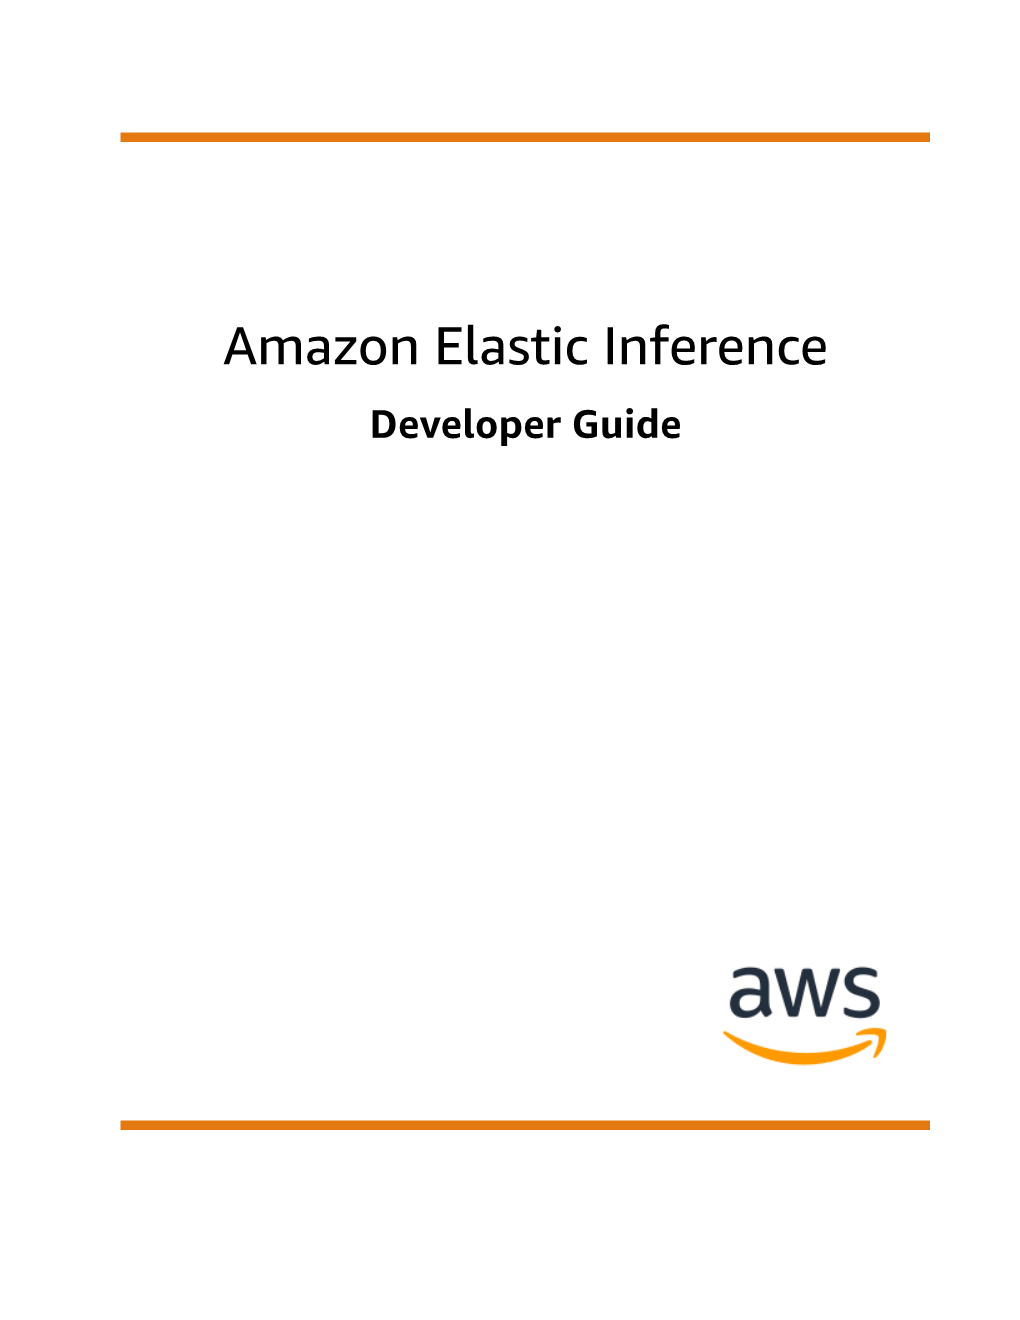 Amazon Elastic Inference Developer Guide Amazon Elastic Inference Developer Guide